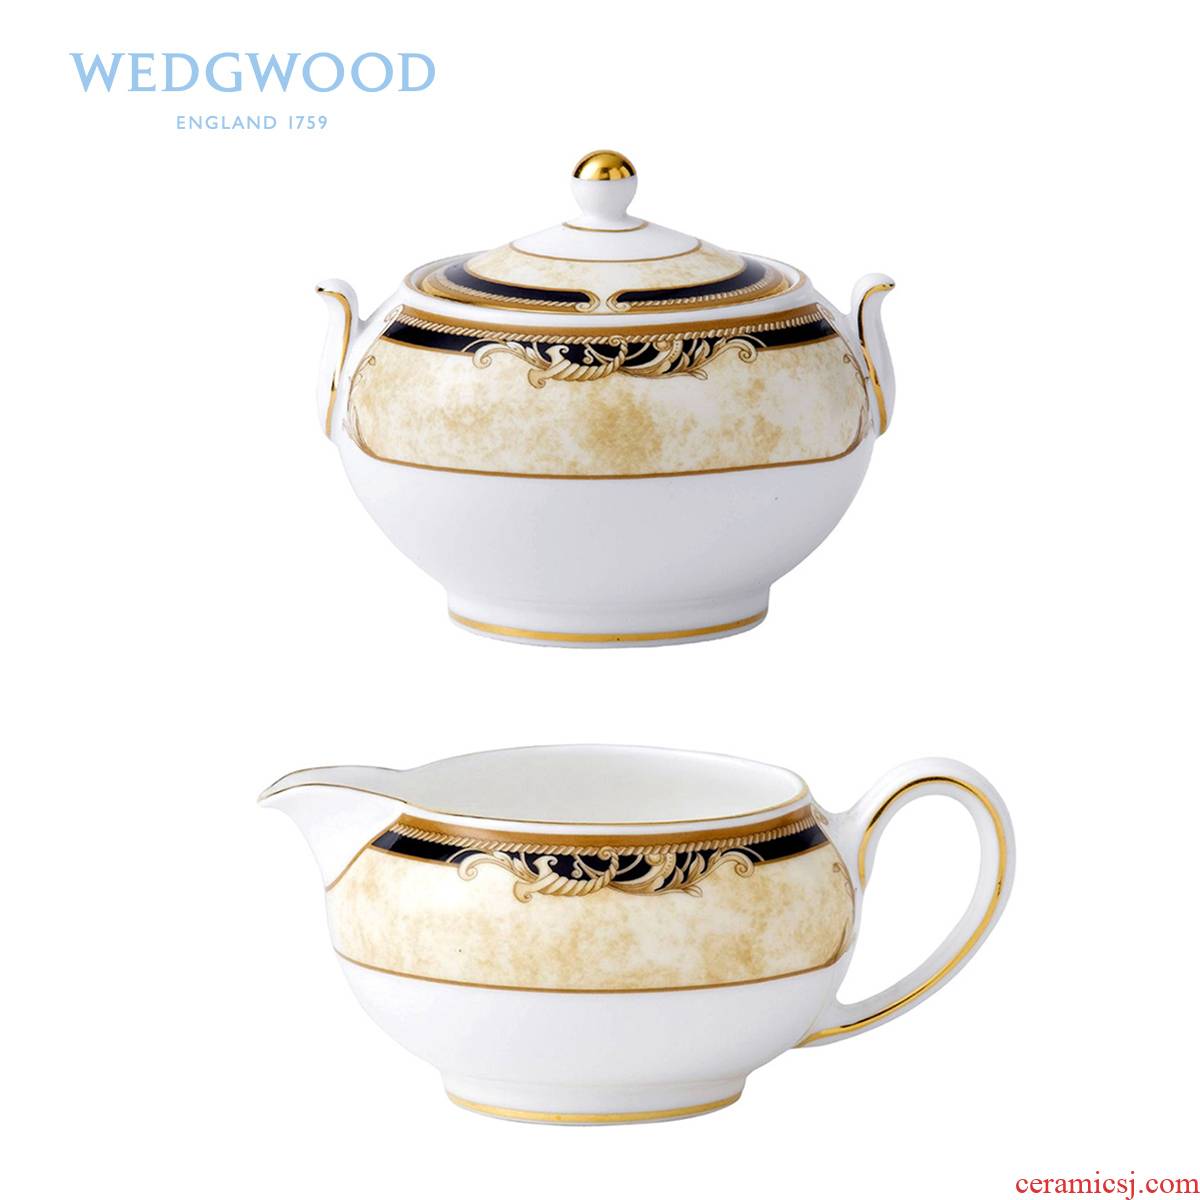 The British Wedgwood waterford Wedgwood Cornucopia The Cornucopia ipads China sugar milk pot set